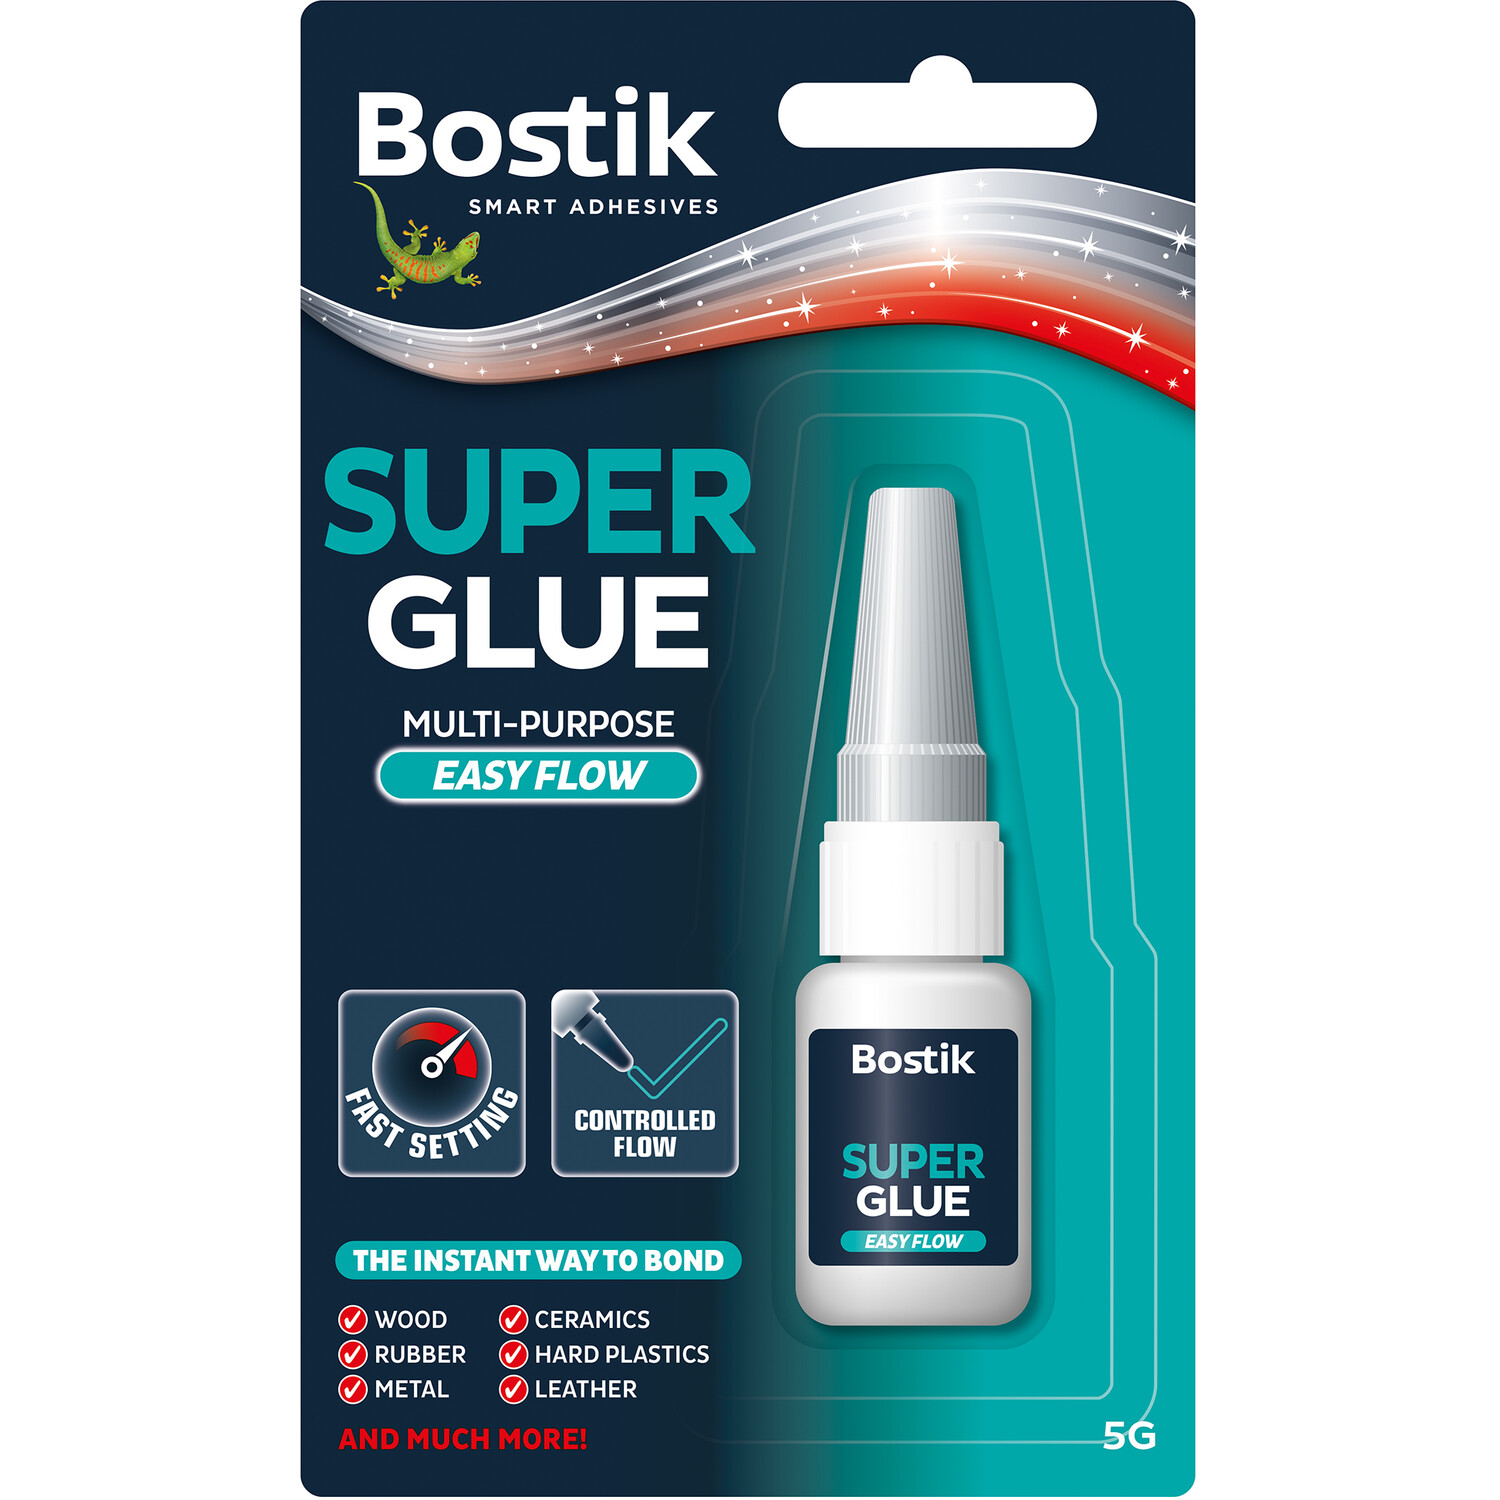 Bostik Smart Adhesive Easy Flow Super Glue Image